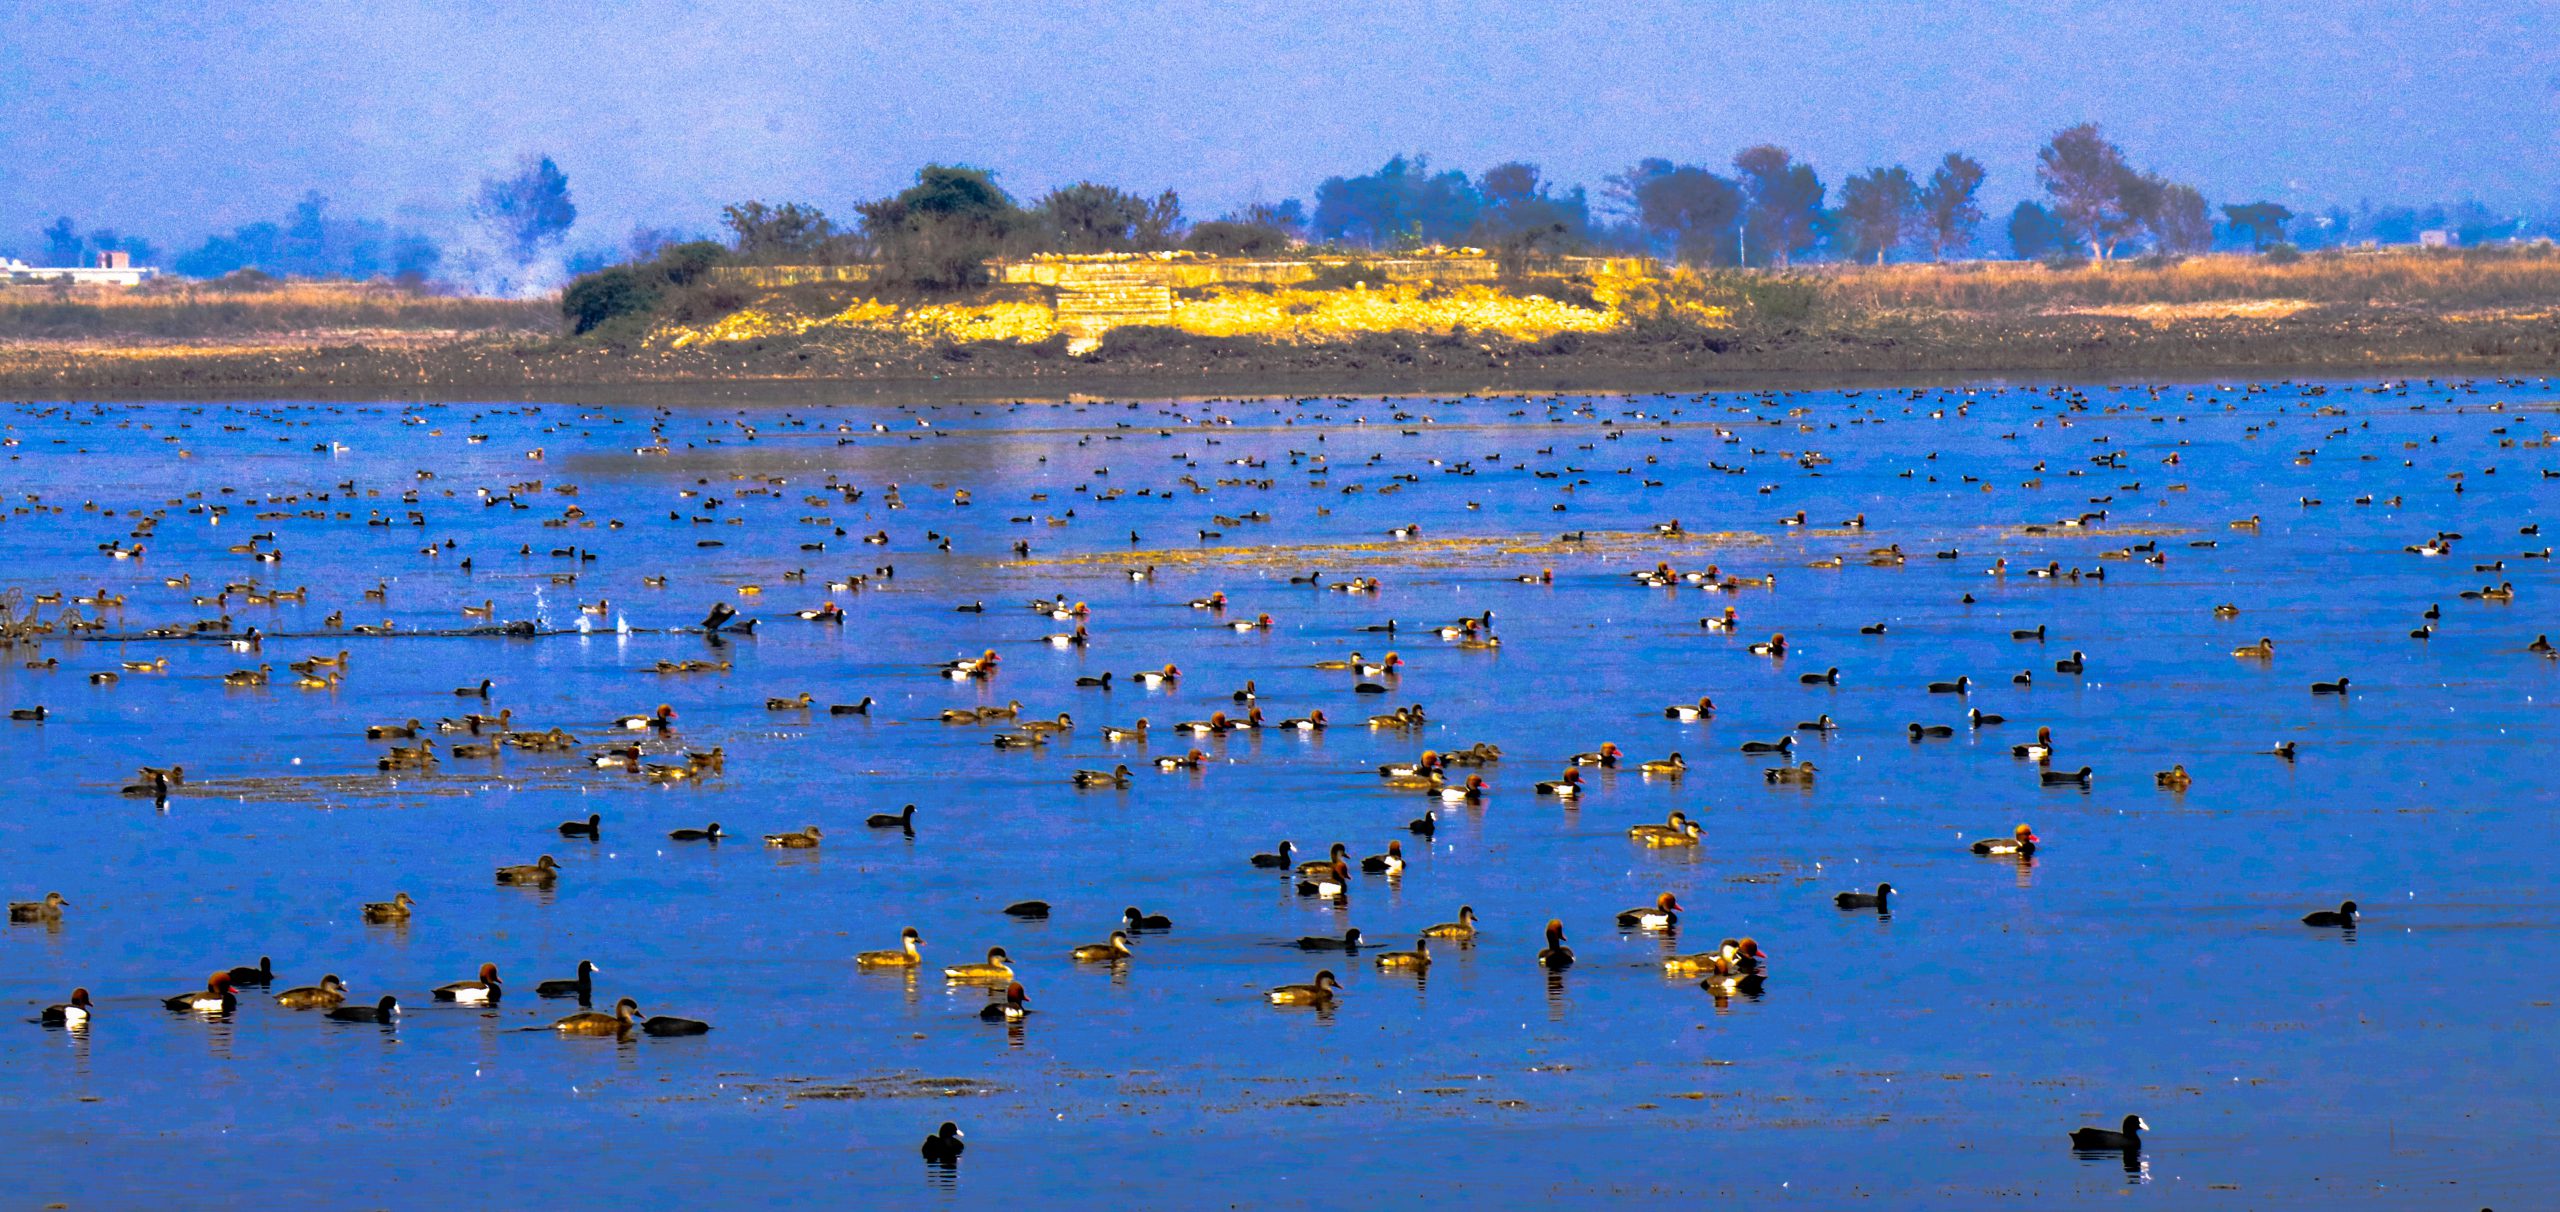 Jagdishpur lake in Nepal, full of birds [image by: Manoj Paudel]